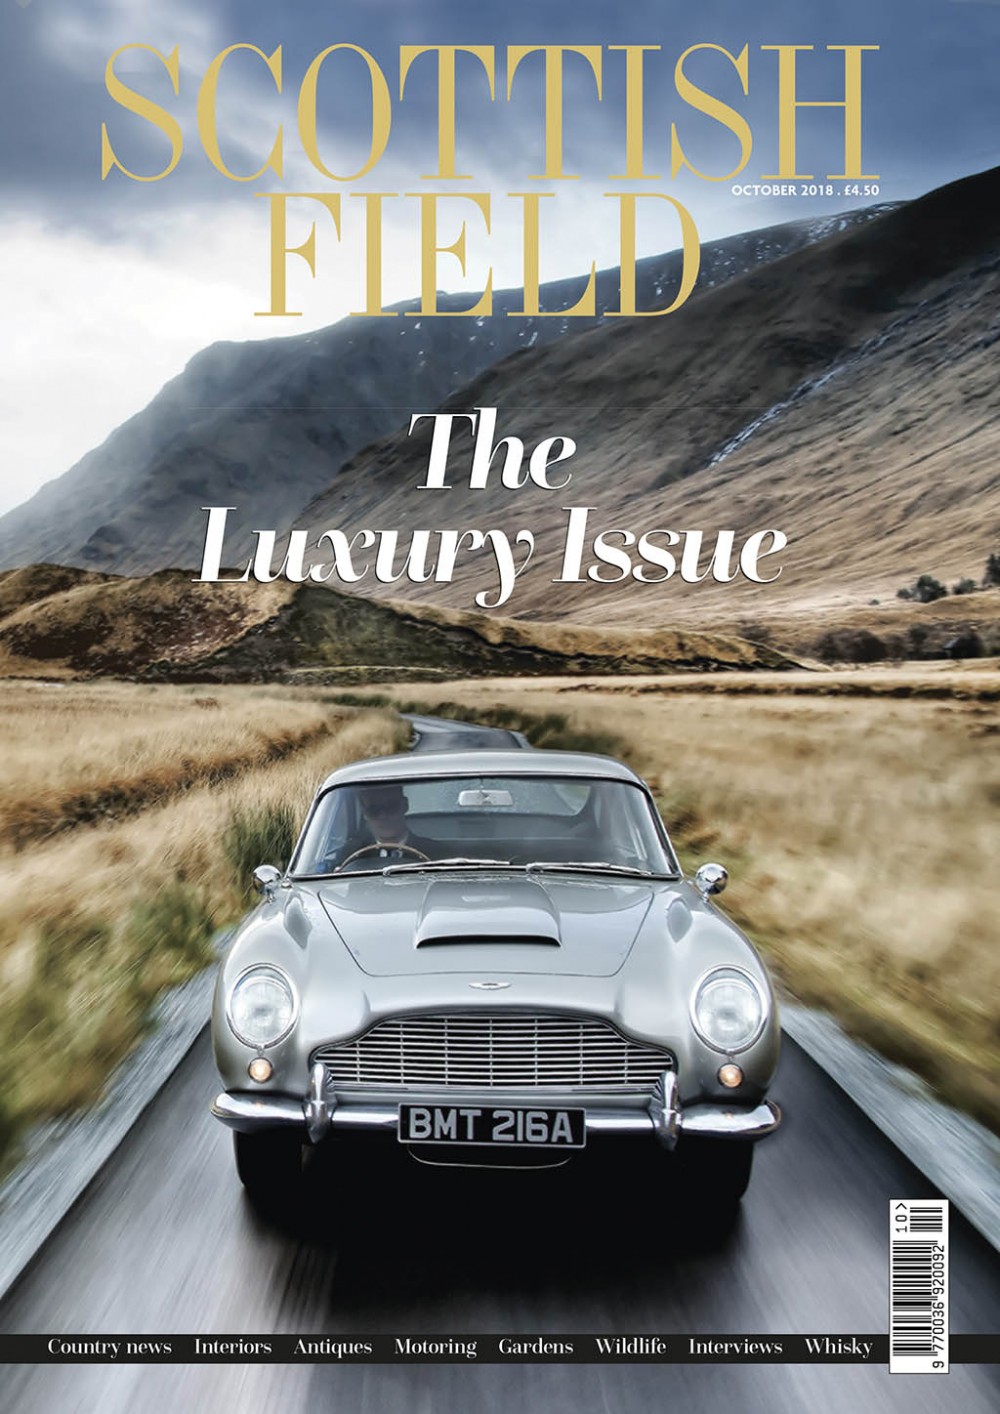 Scottish Field – The Luxury Issue